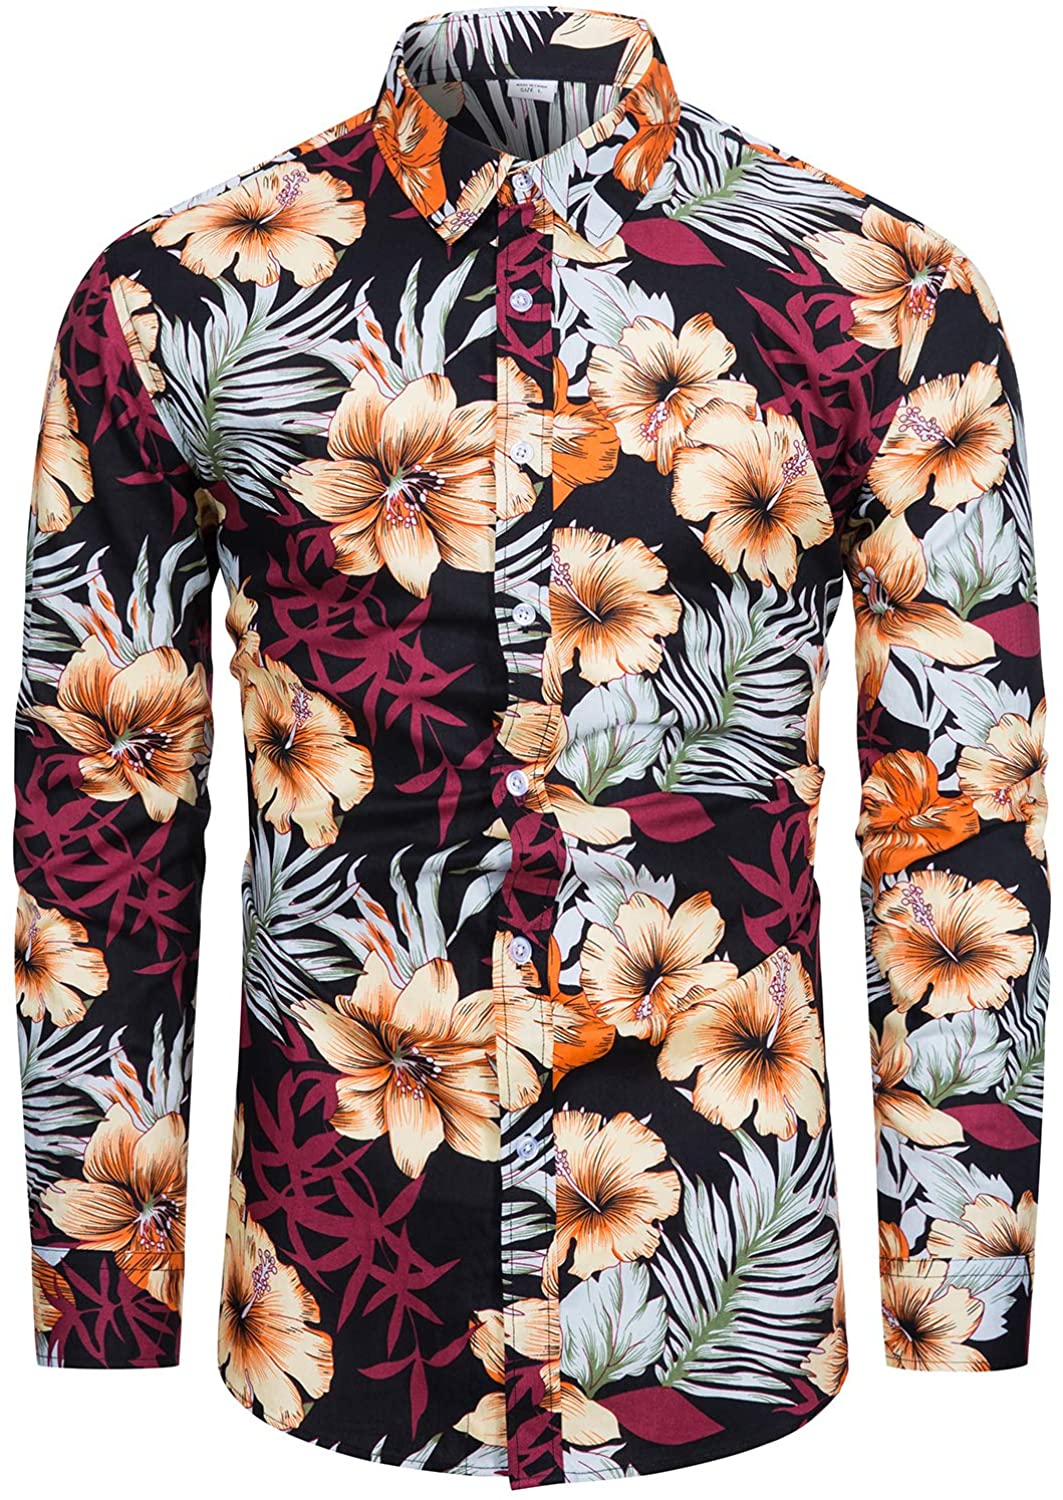 TUNEVUSE Mens Floral Dress Shirt Long Sleeve Hawaiian Button Down Flower Patterned Shirt Cotton